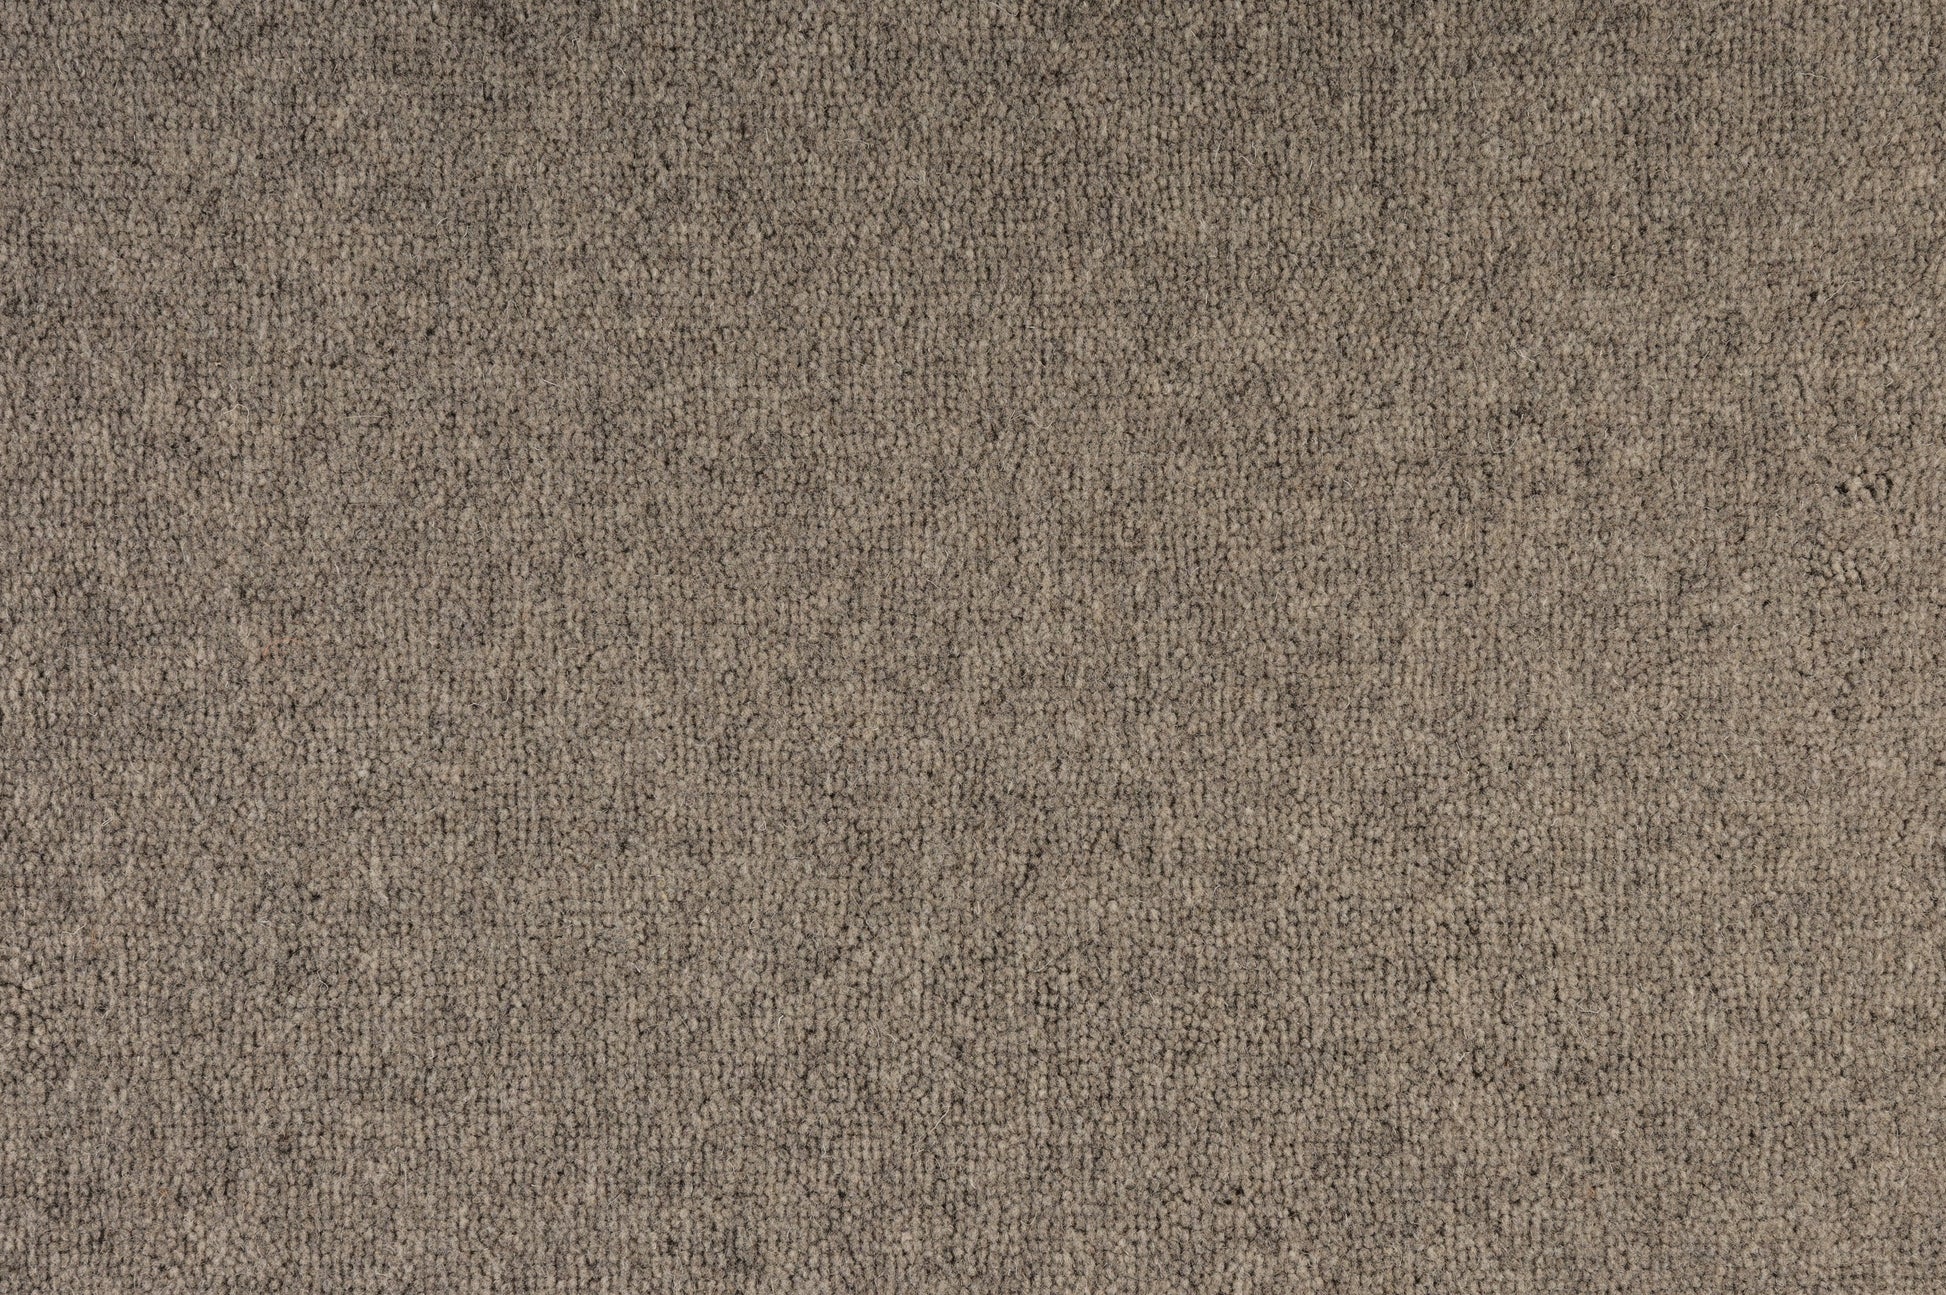 Belltower Plush Carpet